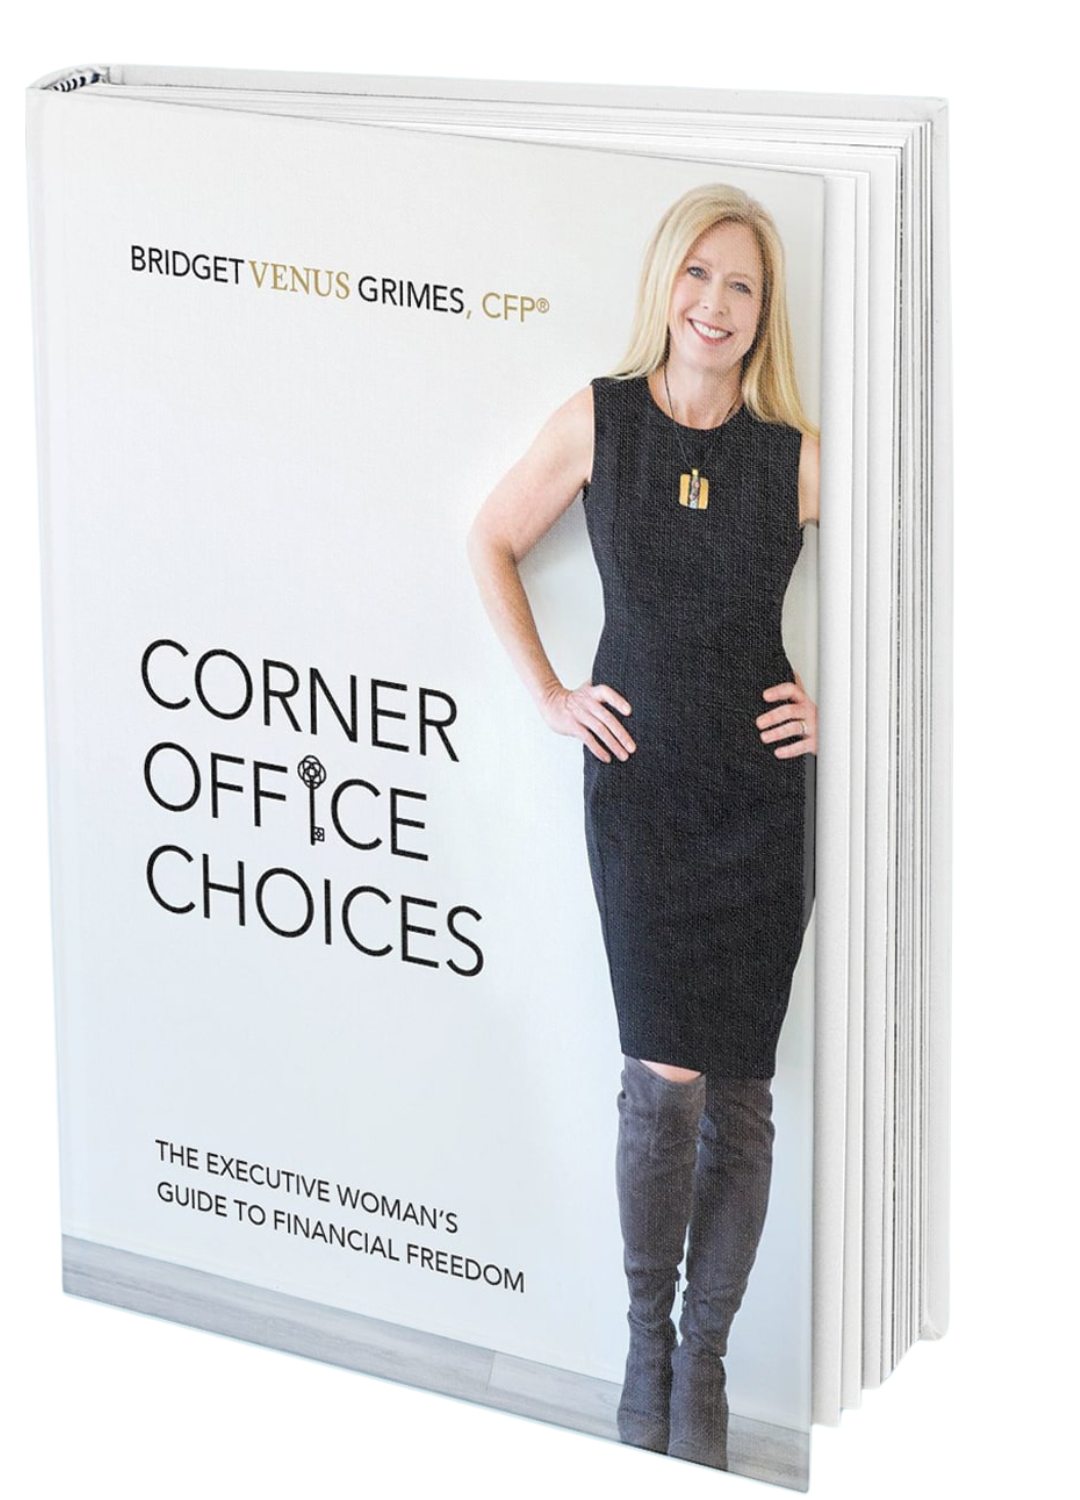 Image of Bridget's book, Corner Office Choices